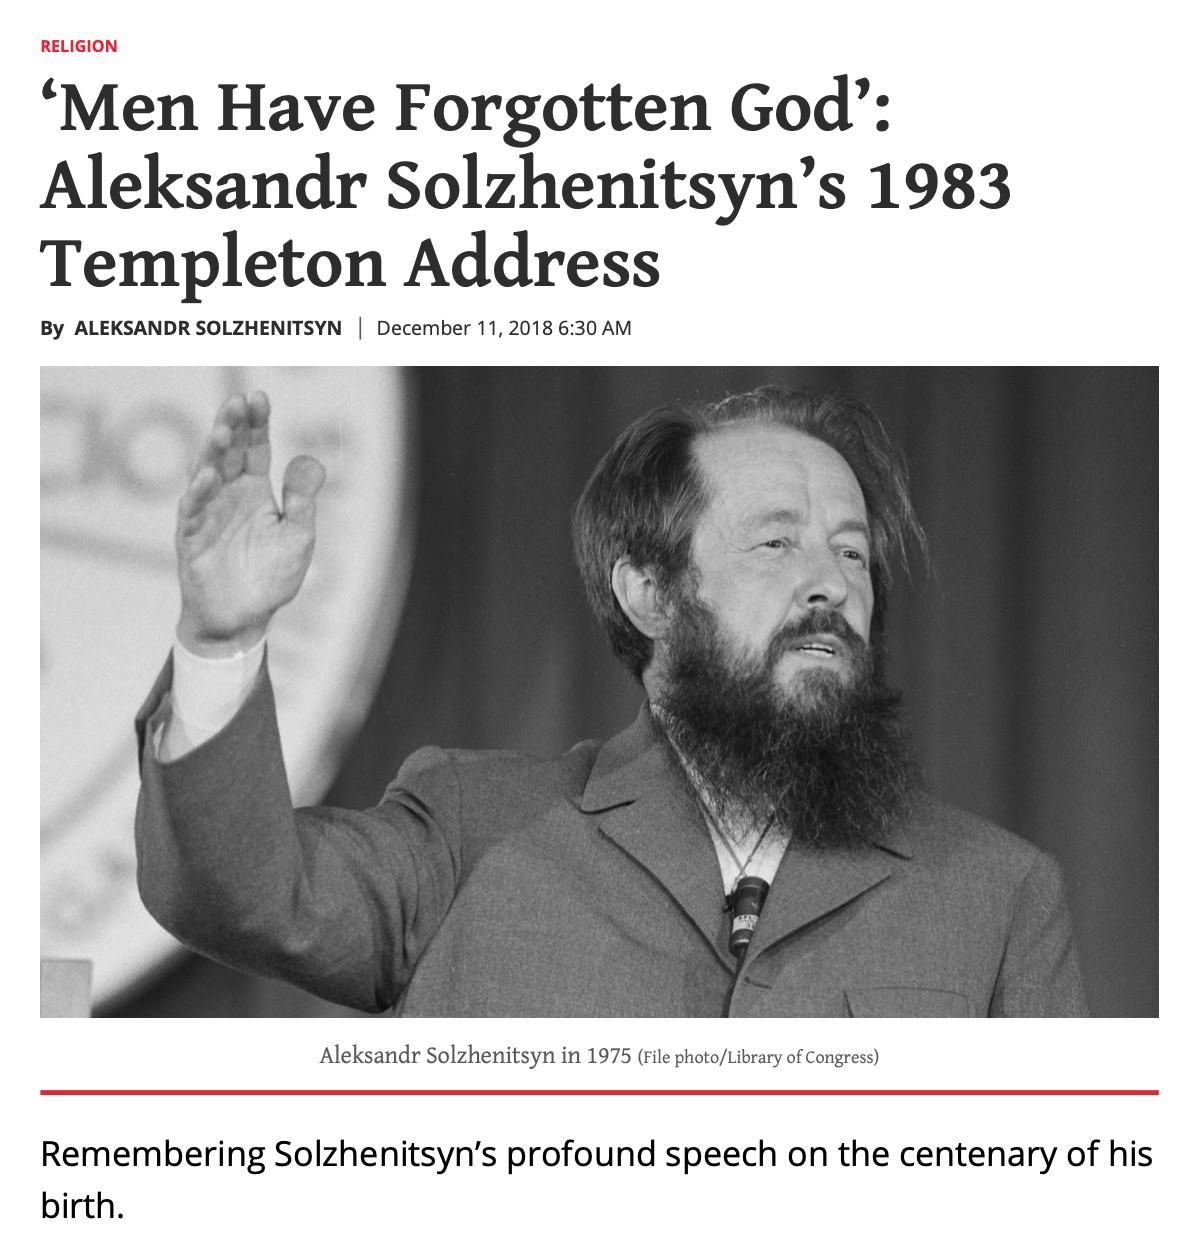 Men Have Forgotten God: Templeton Address (1983) by Aleksandr Solzhenitsyn